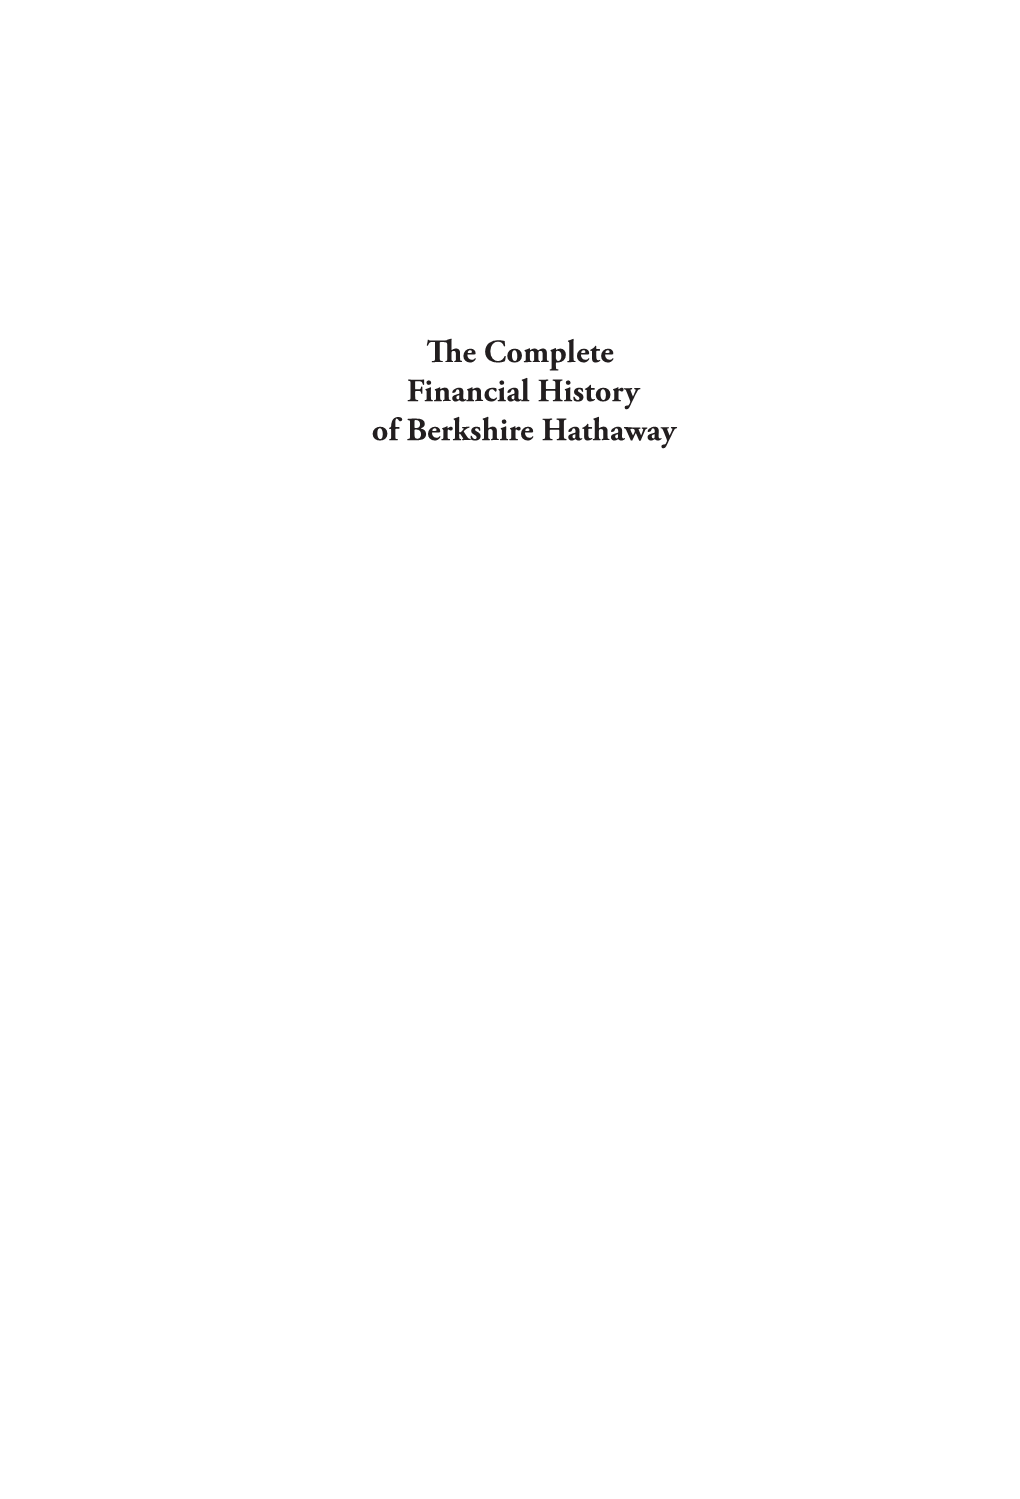 Te Complete Financial History of Berkshire Hathaway